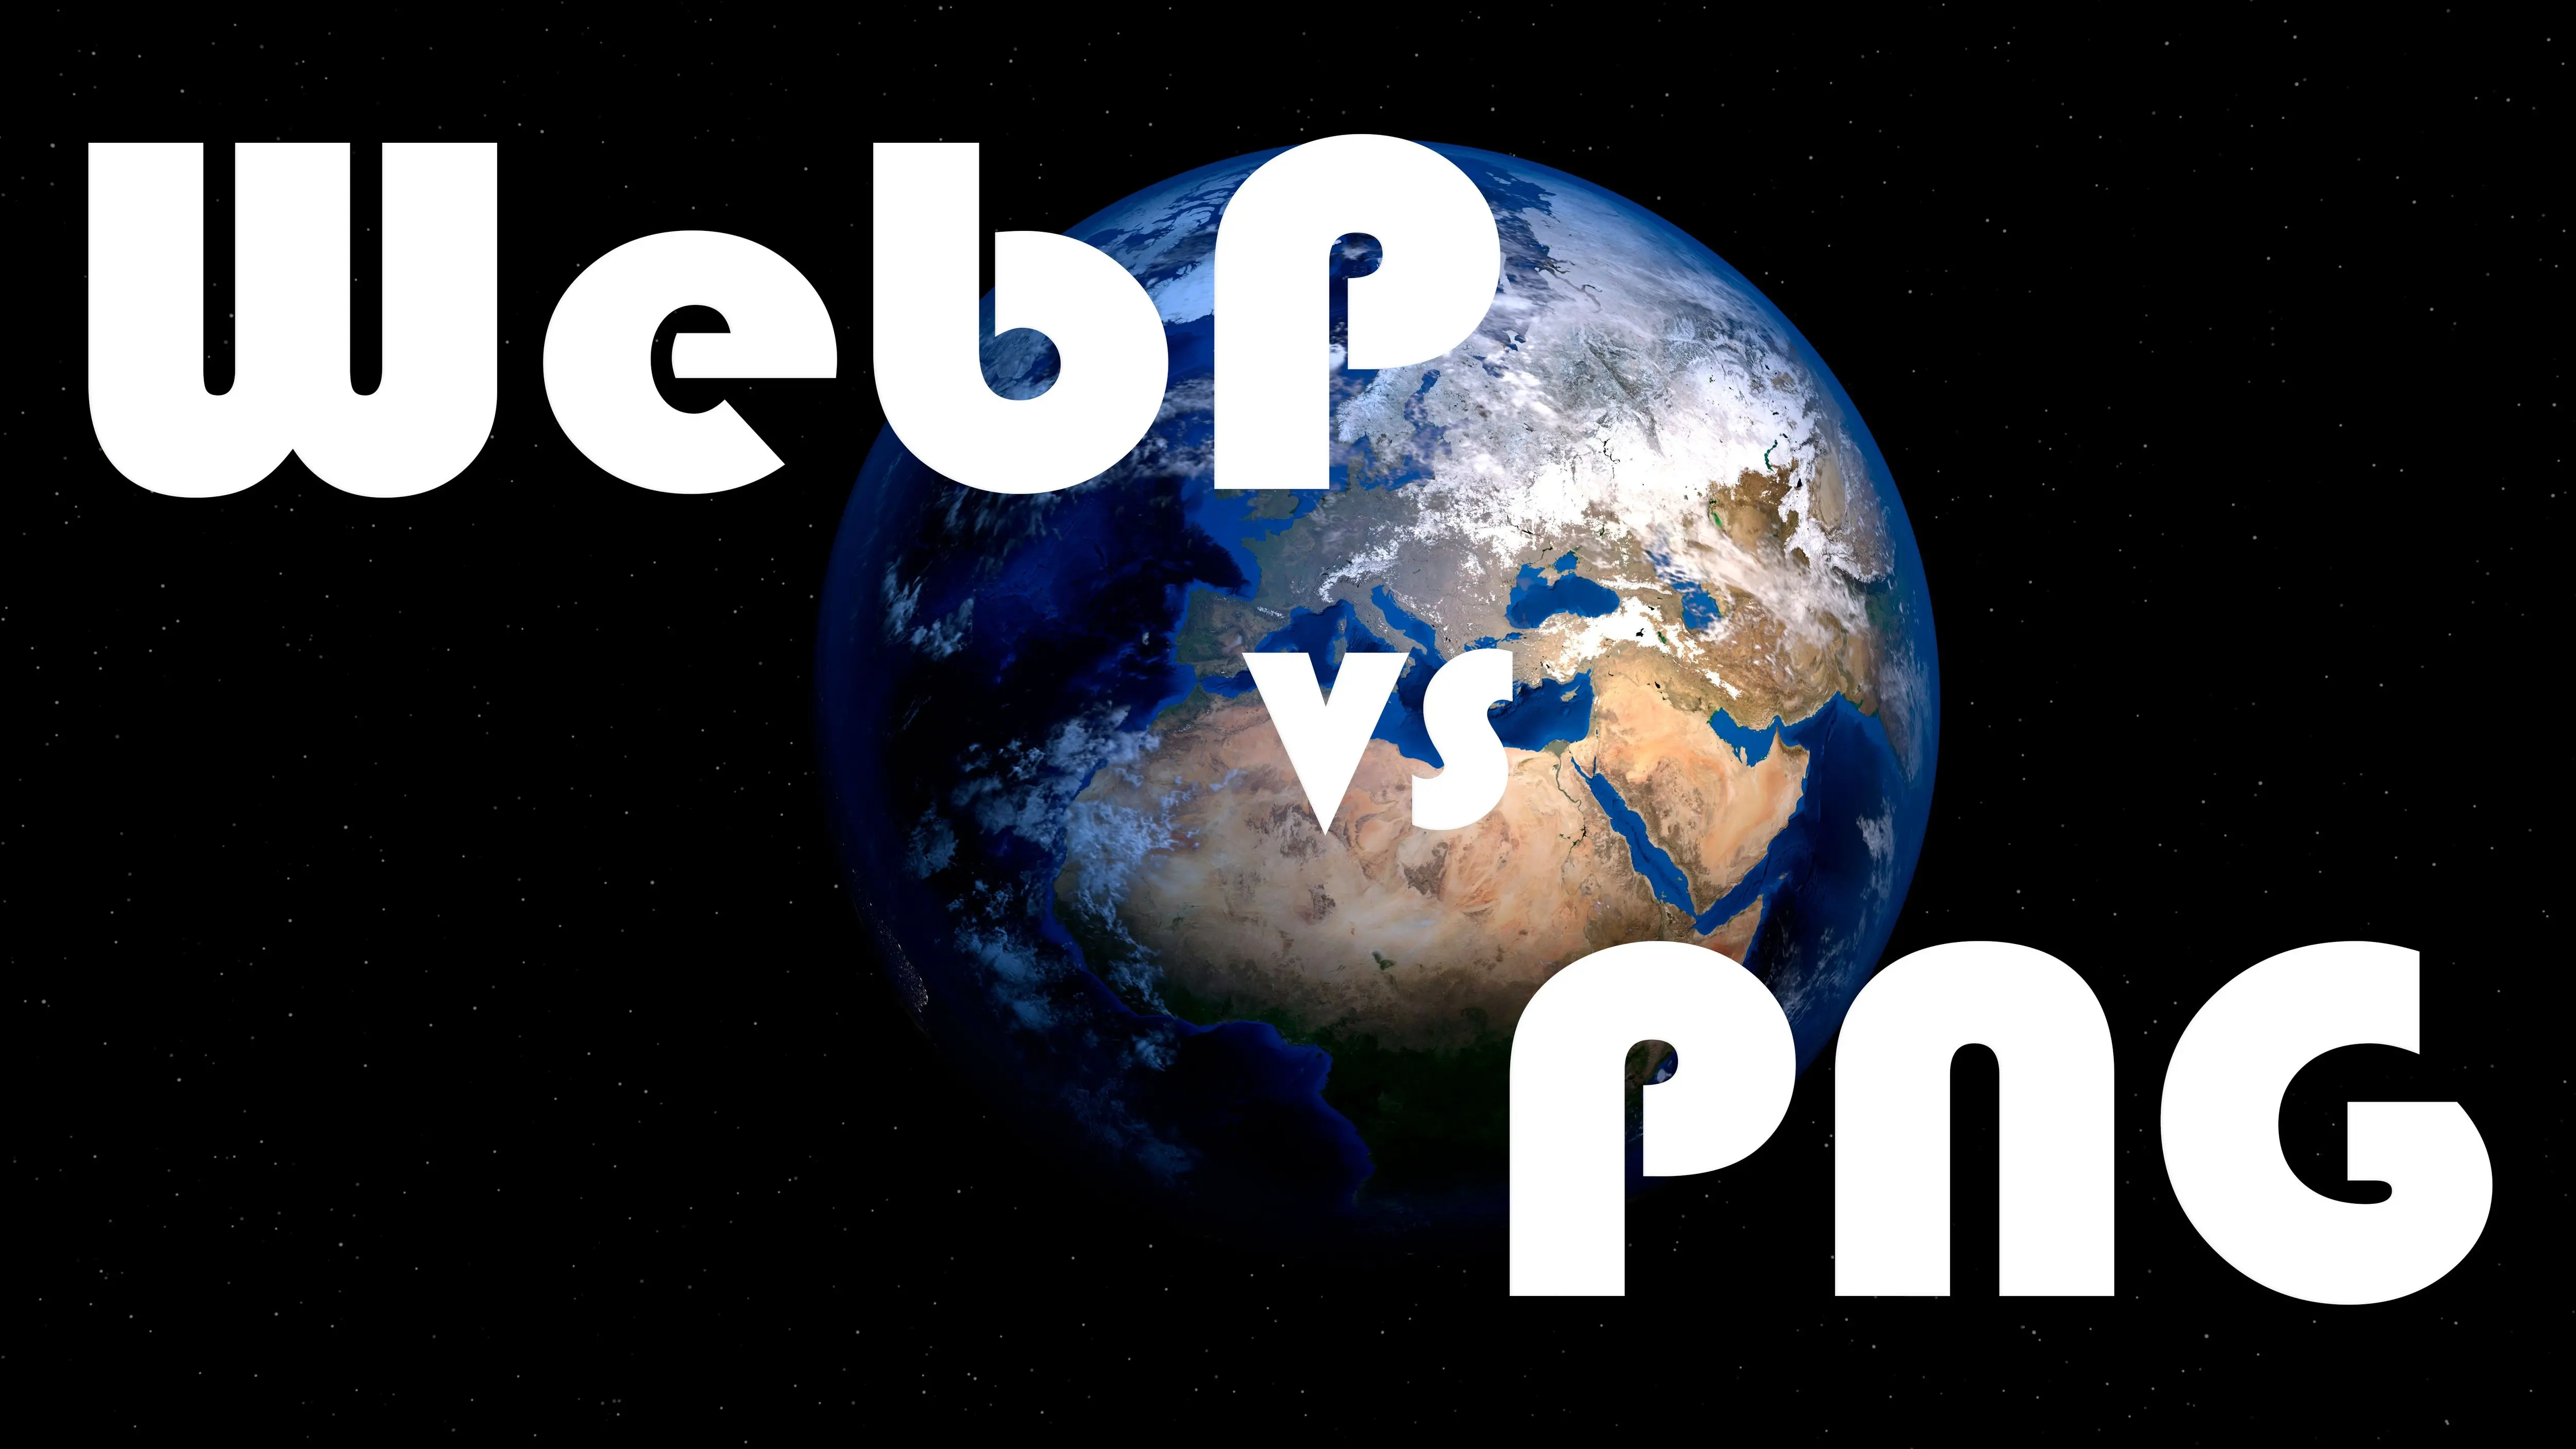 WebP vs. PNG..